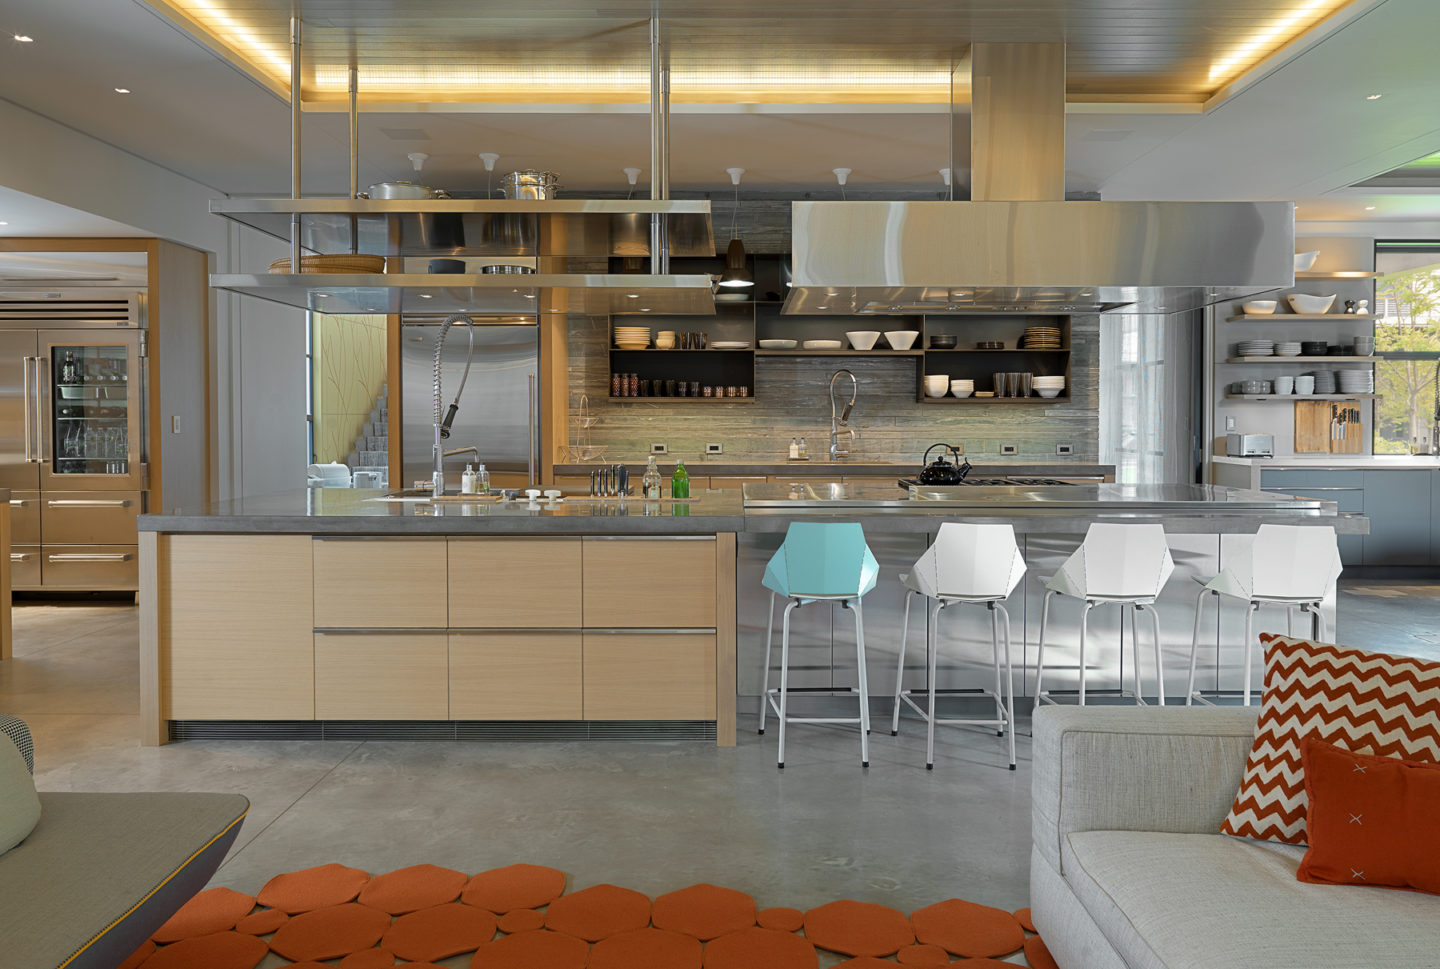 Best Kitchen Appliances 2020 The Oppenheim Group Real Estate